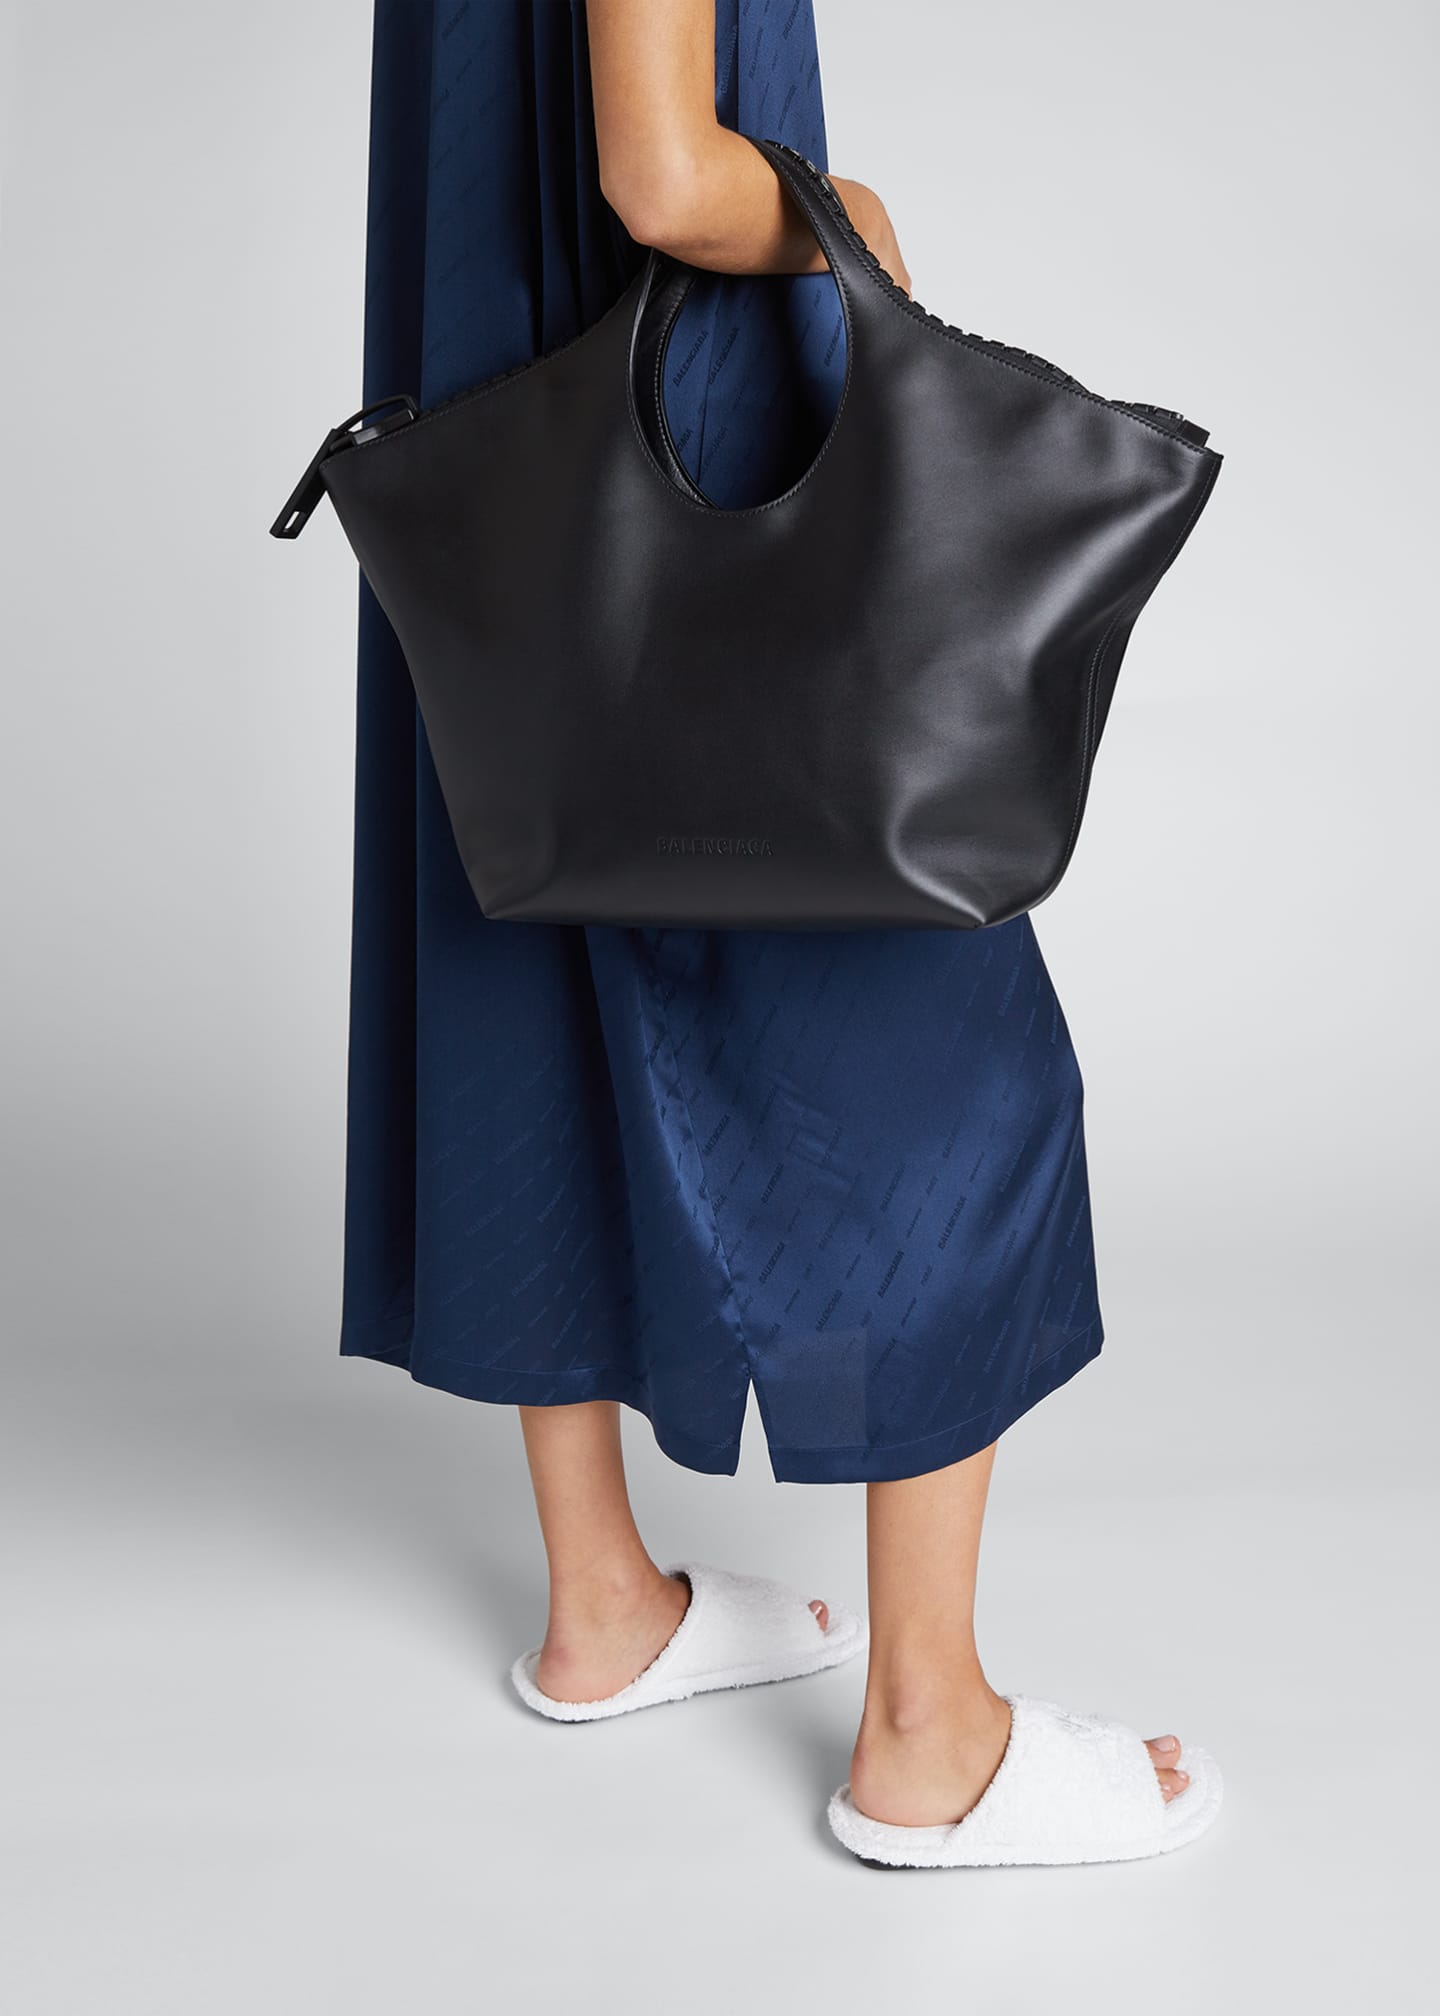 Balenciaga MegaZip Smooth Leather Tote Bag - Bergdorf Goodman